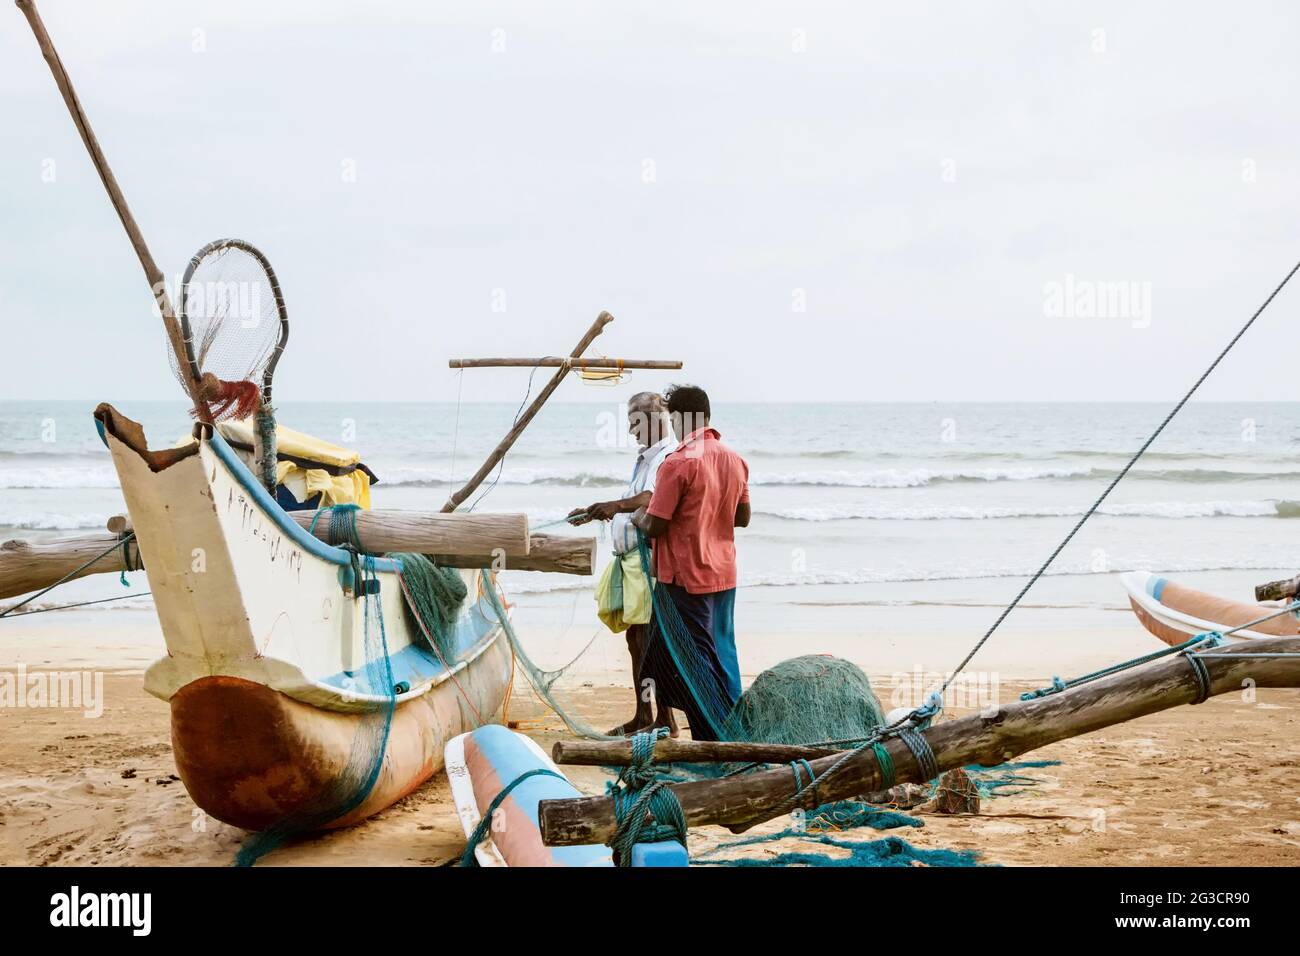 Fishermen working on boat at Weligama beach, Sri Lanka Stock Photo